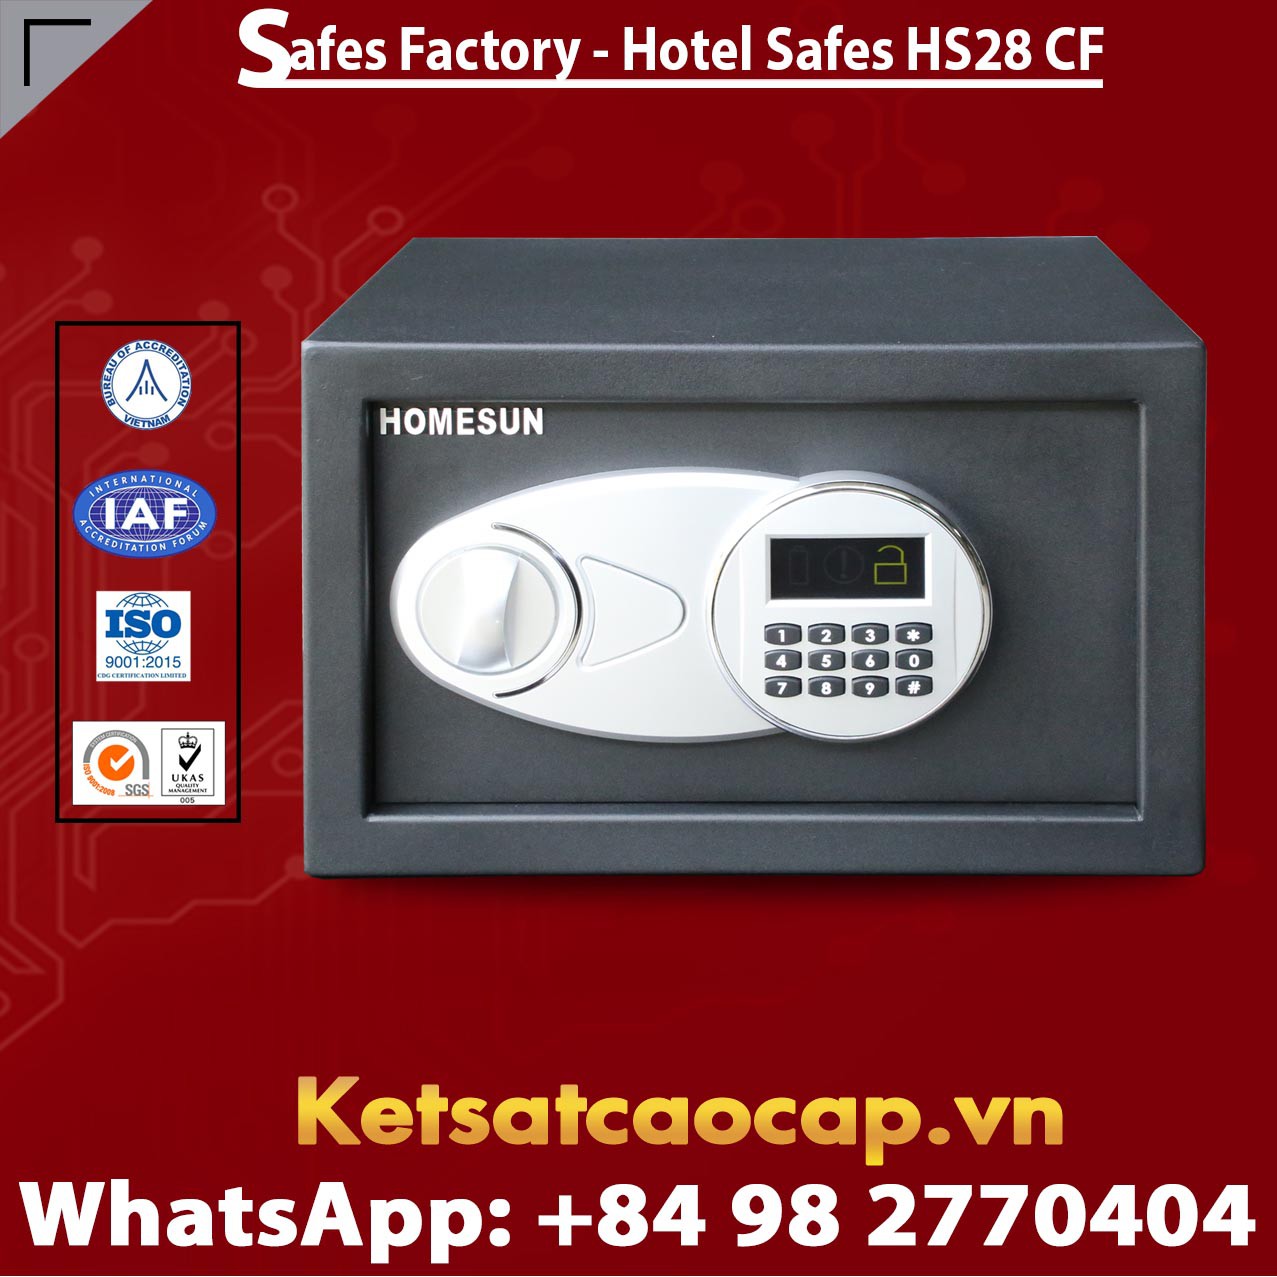 Safe in Hotel HOMESUN HS28 CF